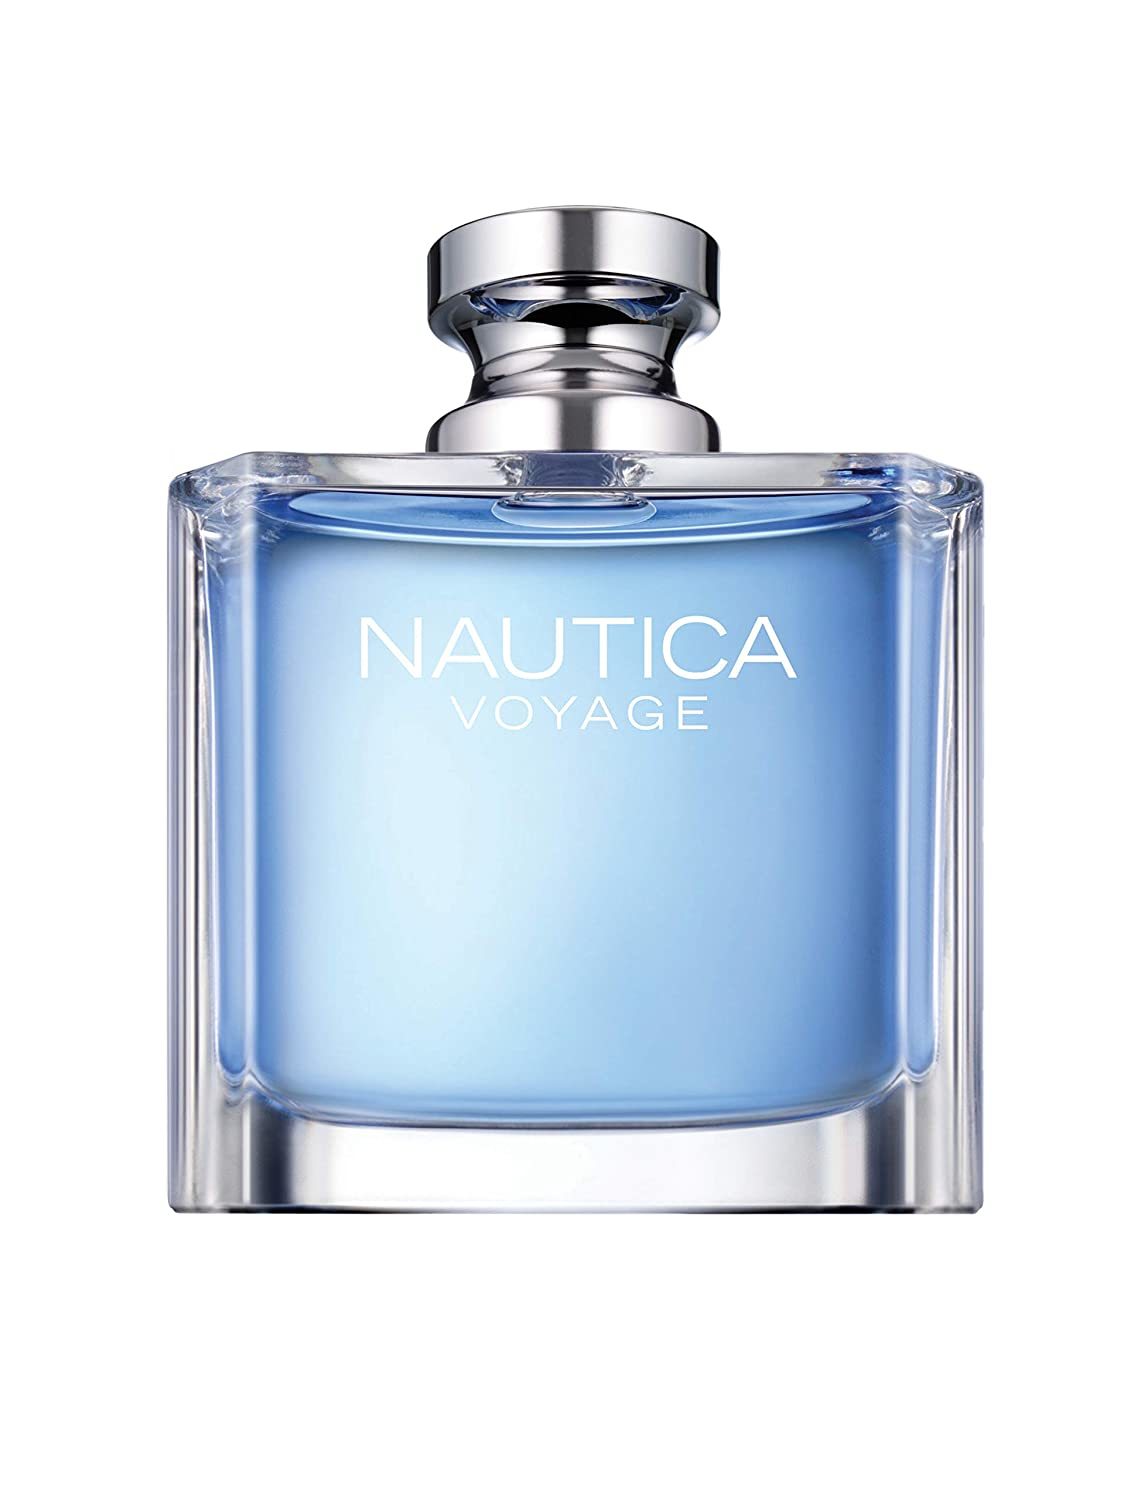 New Nautica Voyage 146364 Toilette Spray for Men, Eau De, 1.6 oz